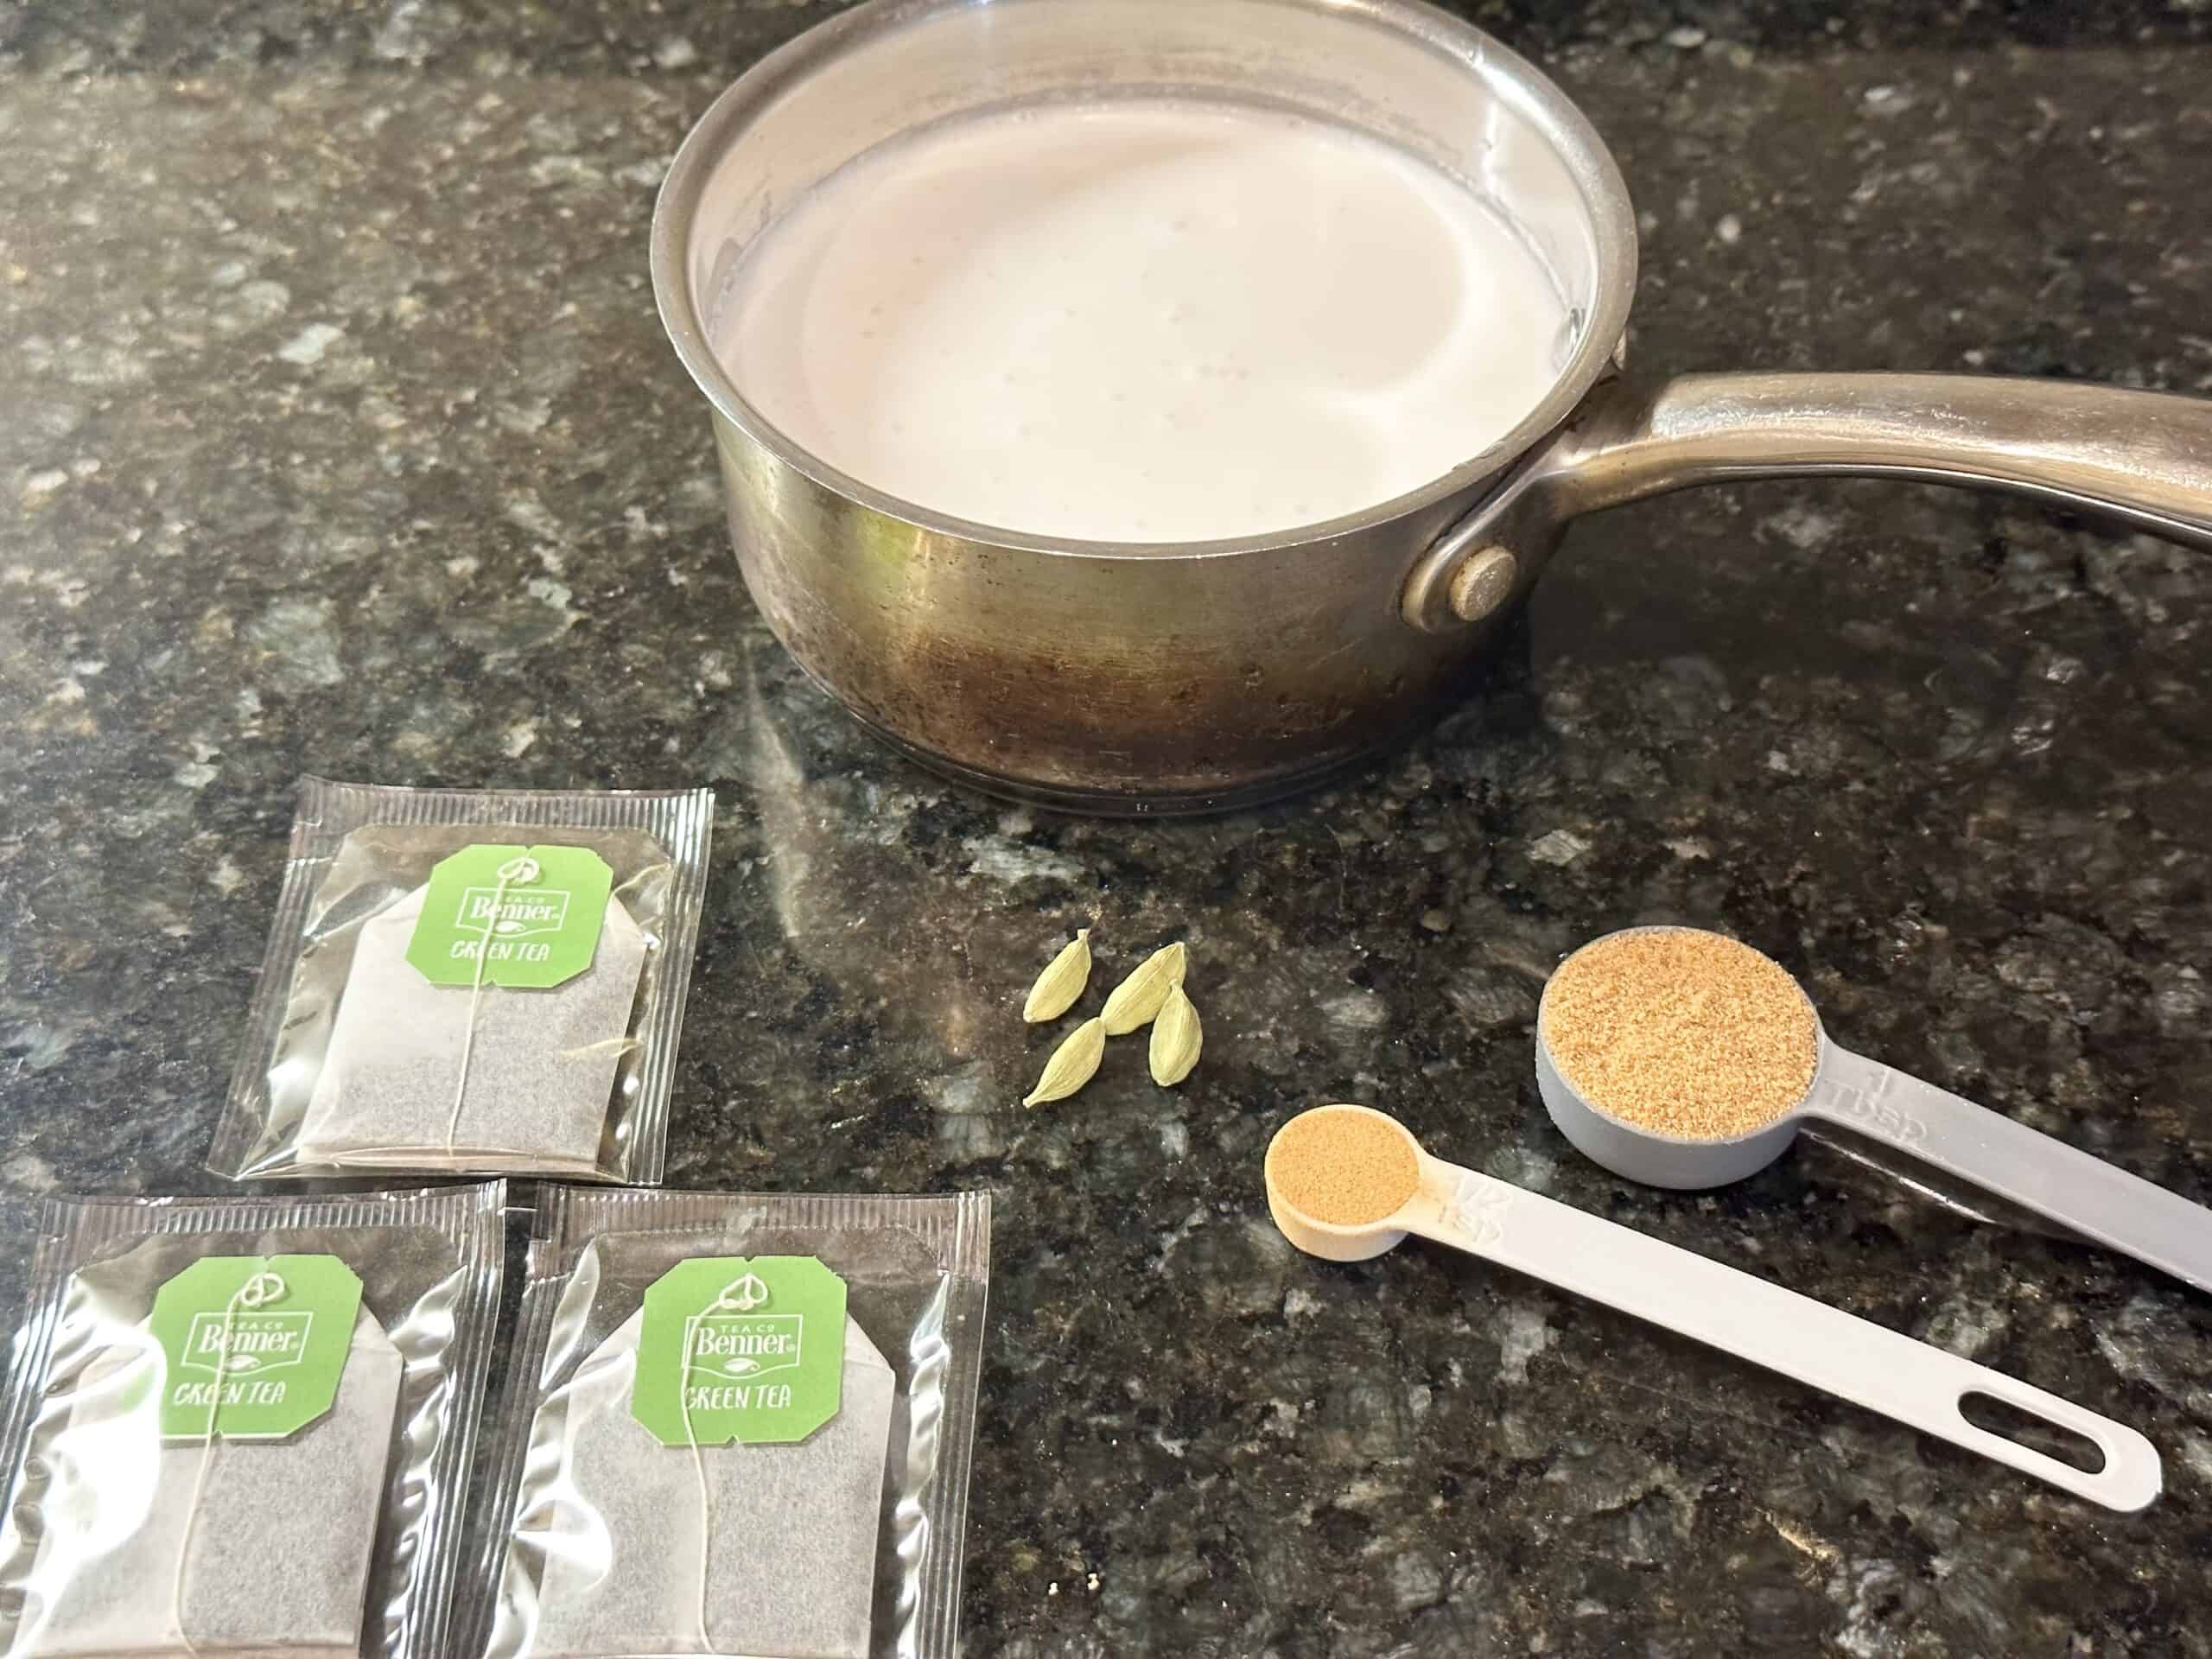 Ingredients for the almond milk tea